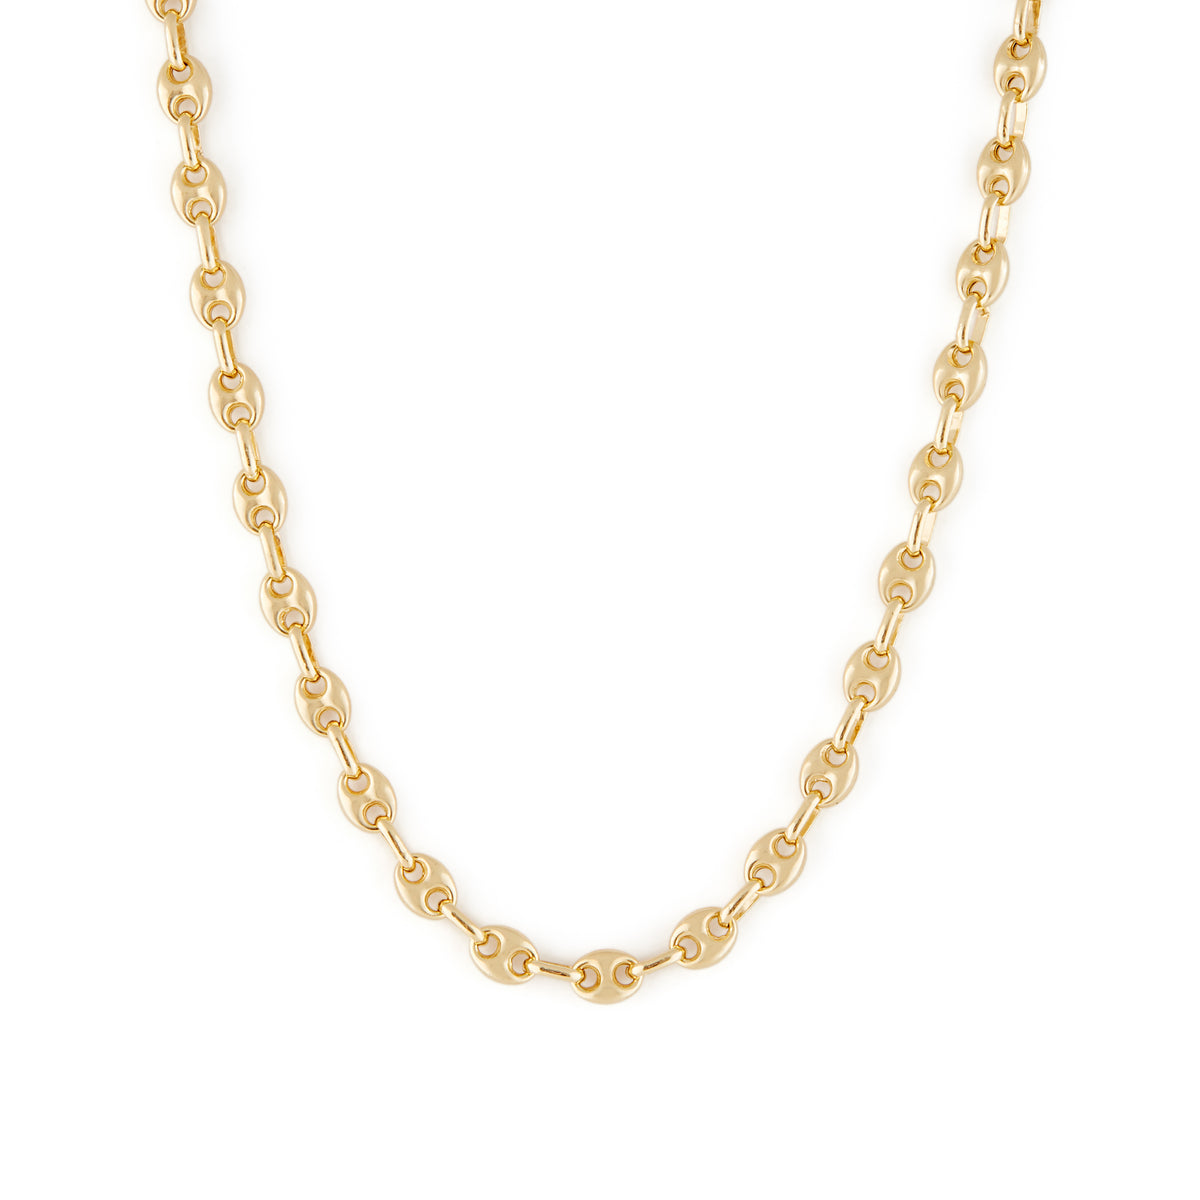 Marbella Necklace - 14k Gold Vermeil